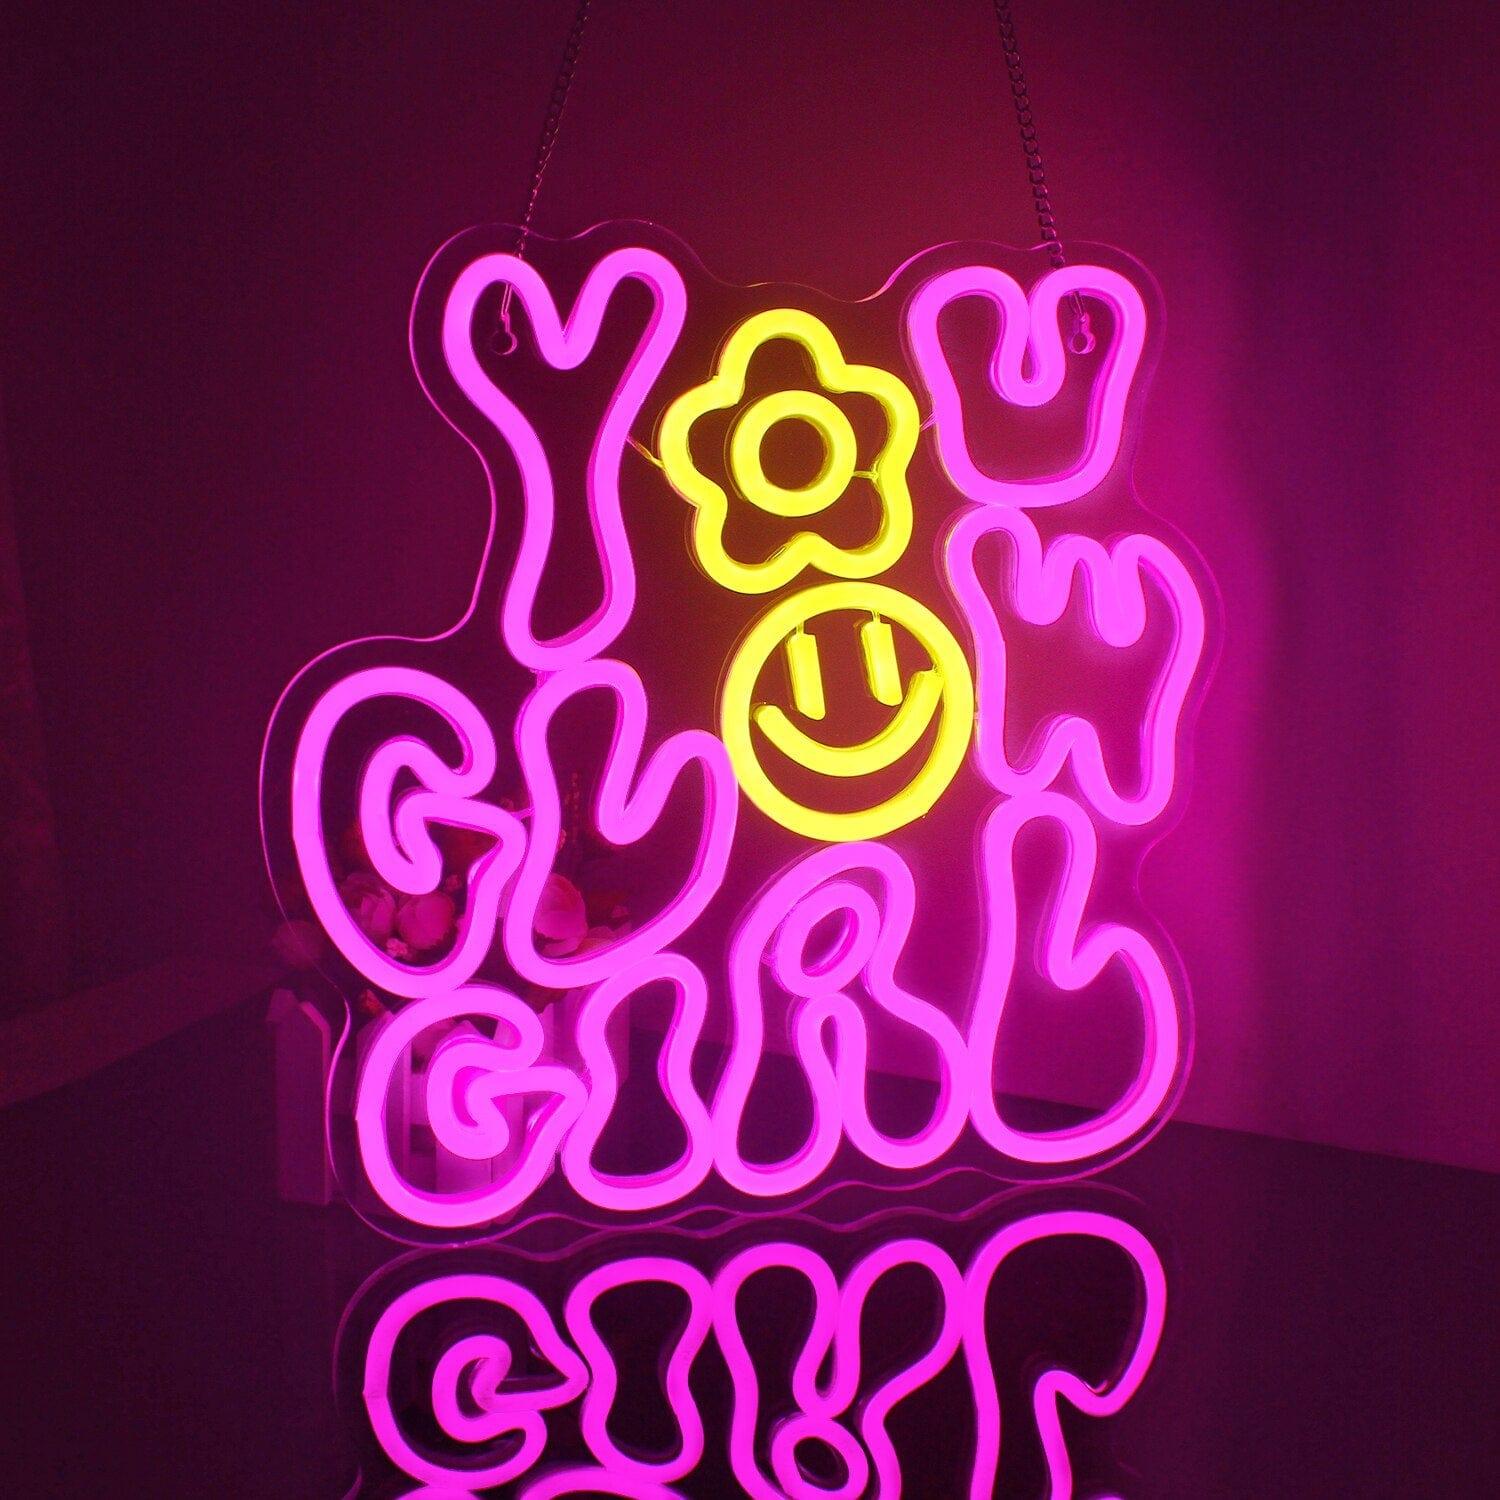 You Glow Girl LED Neon Wall Decoration - Sickhaus